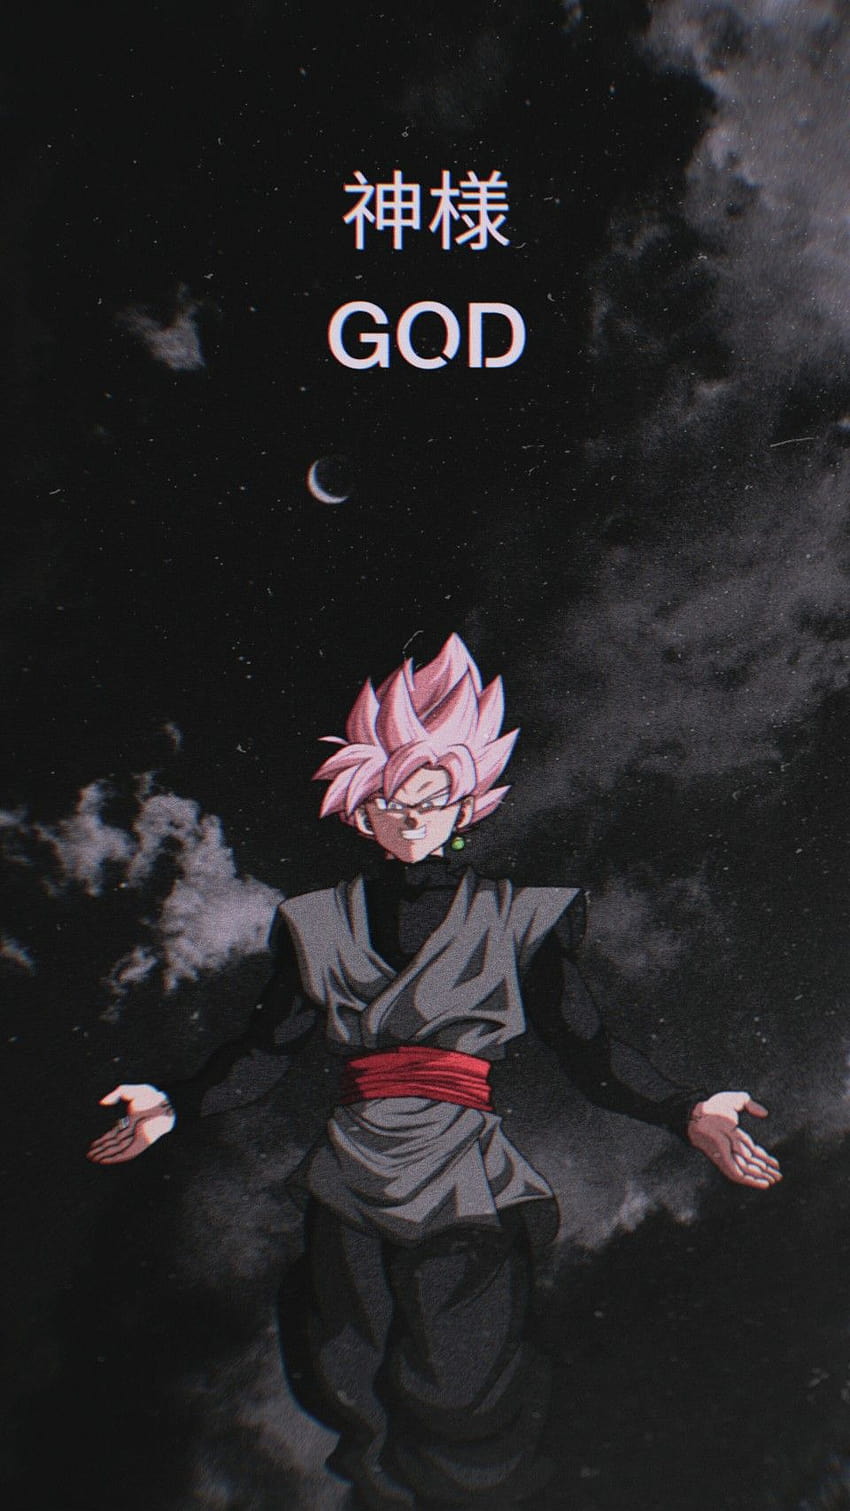 Goku black rose gold wallpaper phone background aesthetic anime - Goku, Dragon Ball